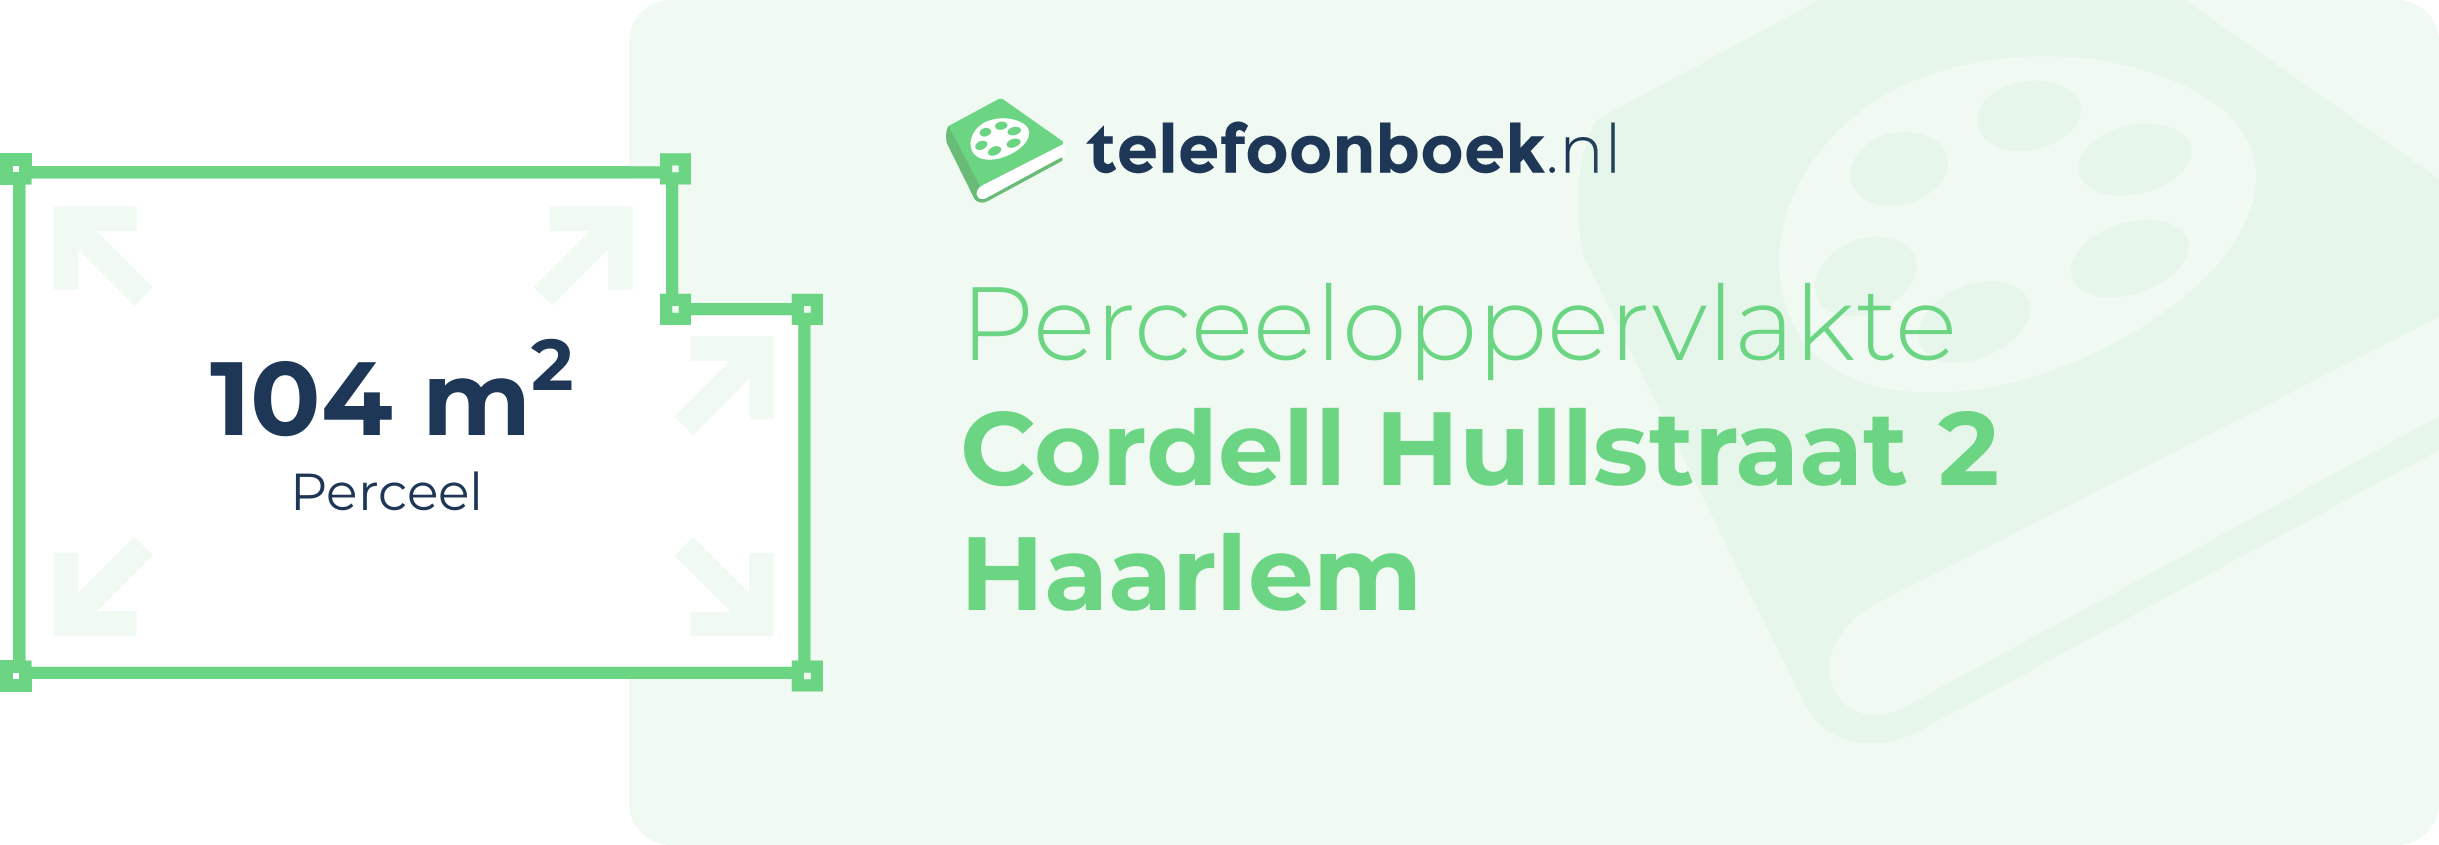 Perceeloppervlakte Cordell Hullstraat 2 Haarlem